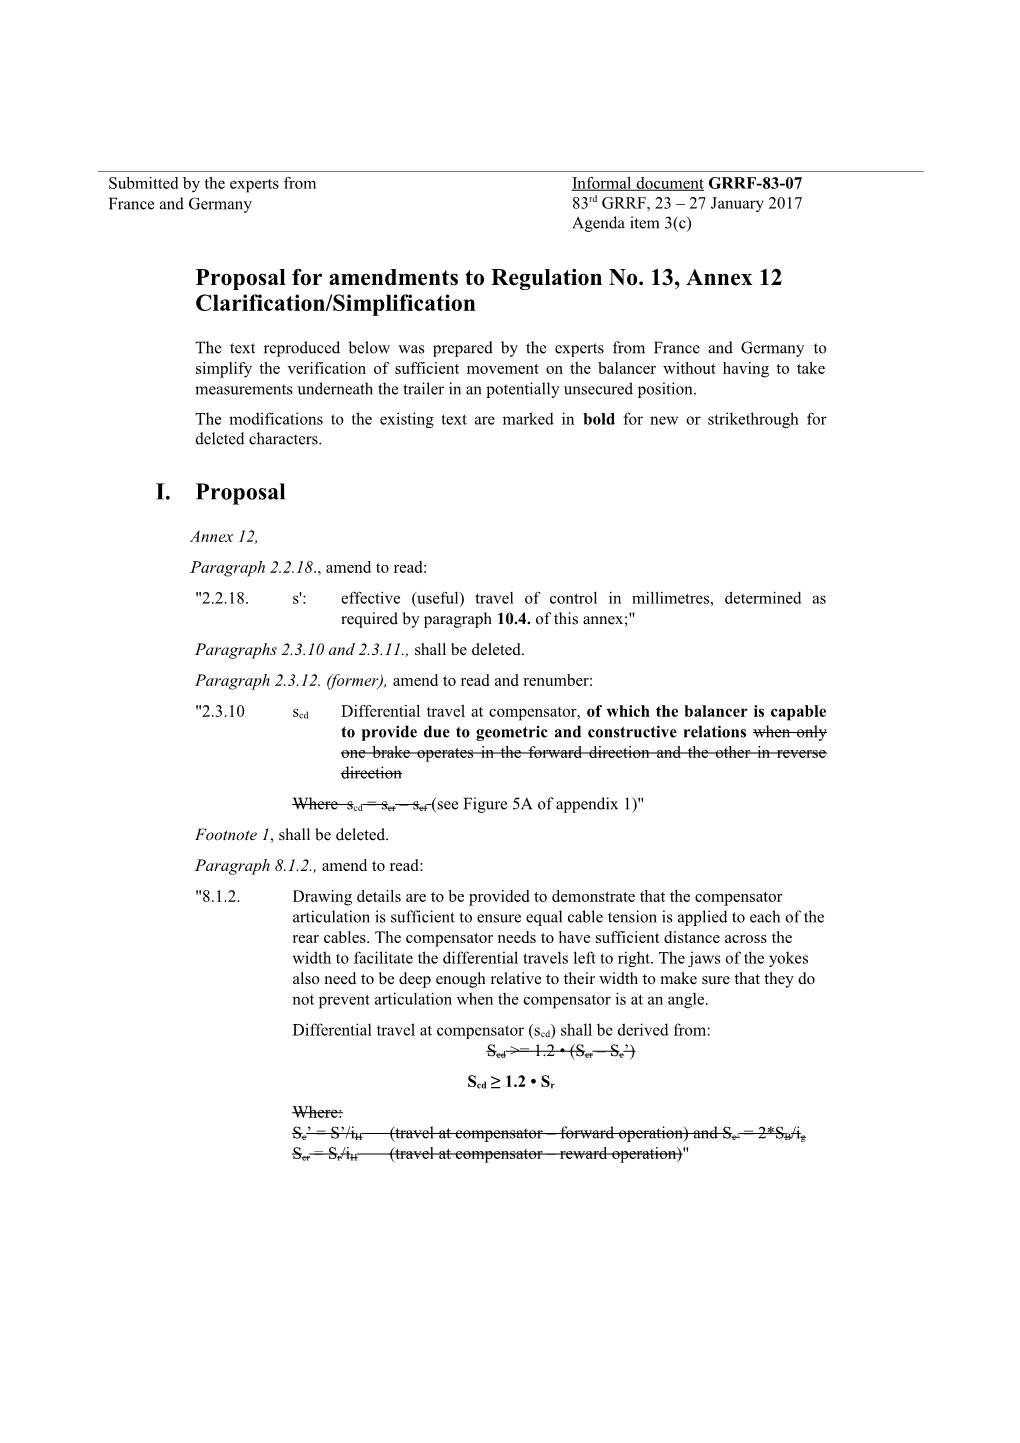 Proposal for Amendments to Regulation No. 13, Annex 12 Clarification/Simplification